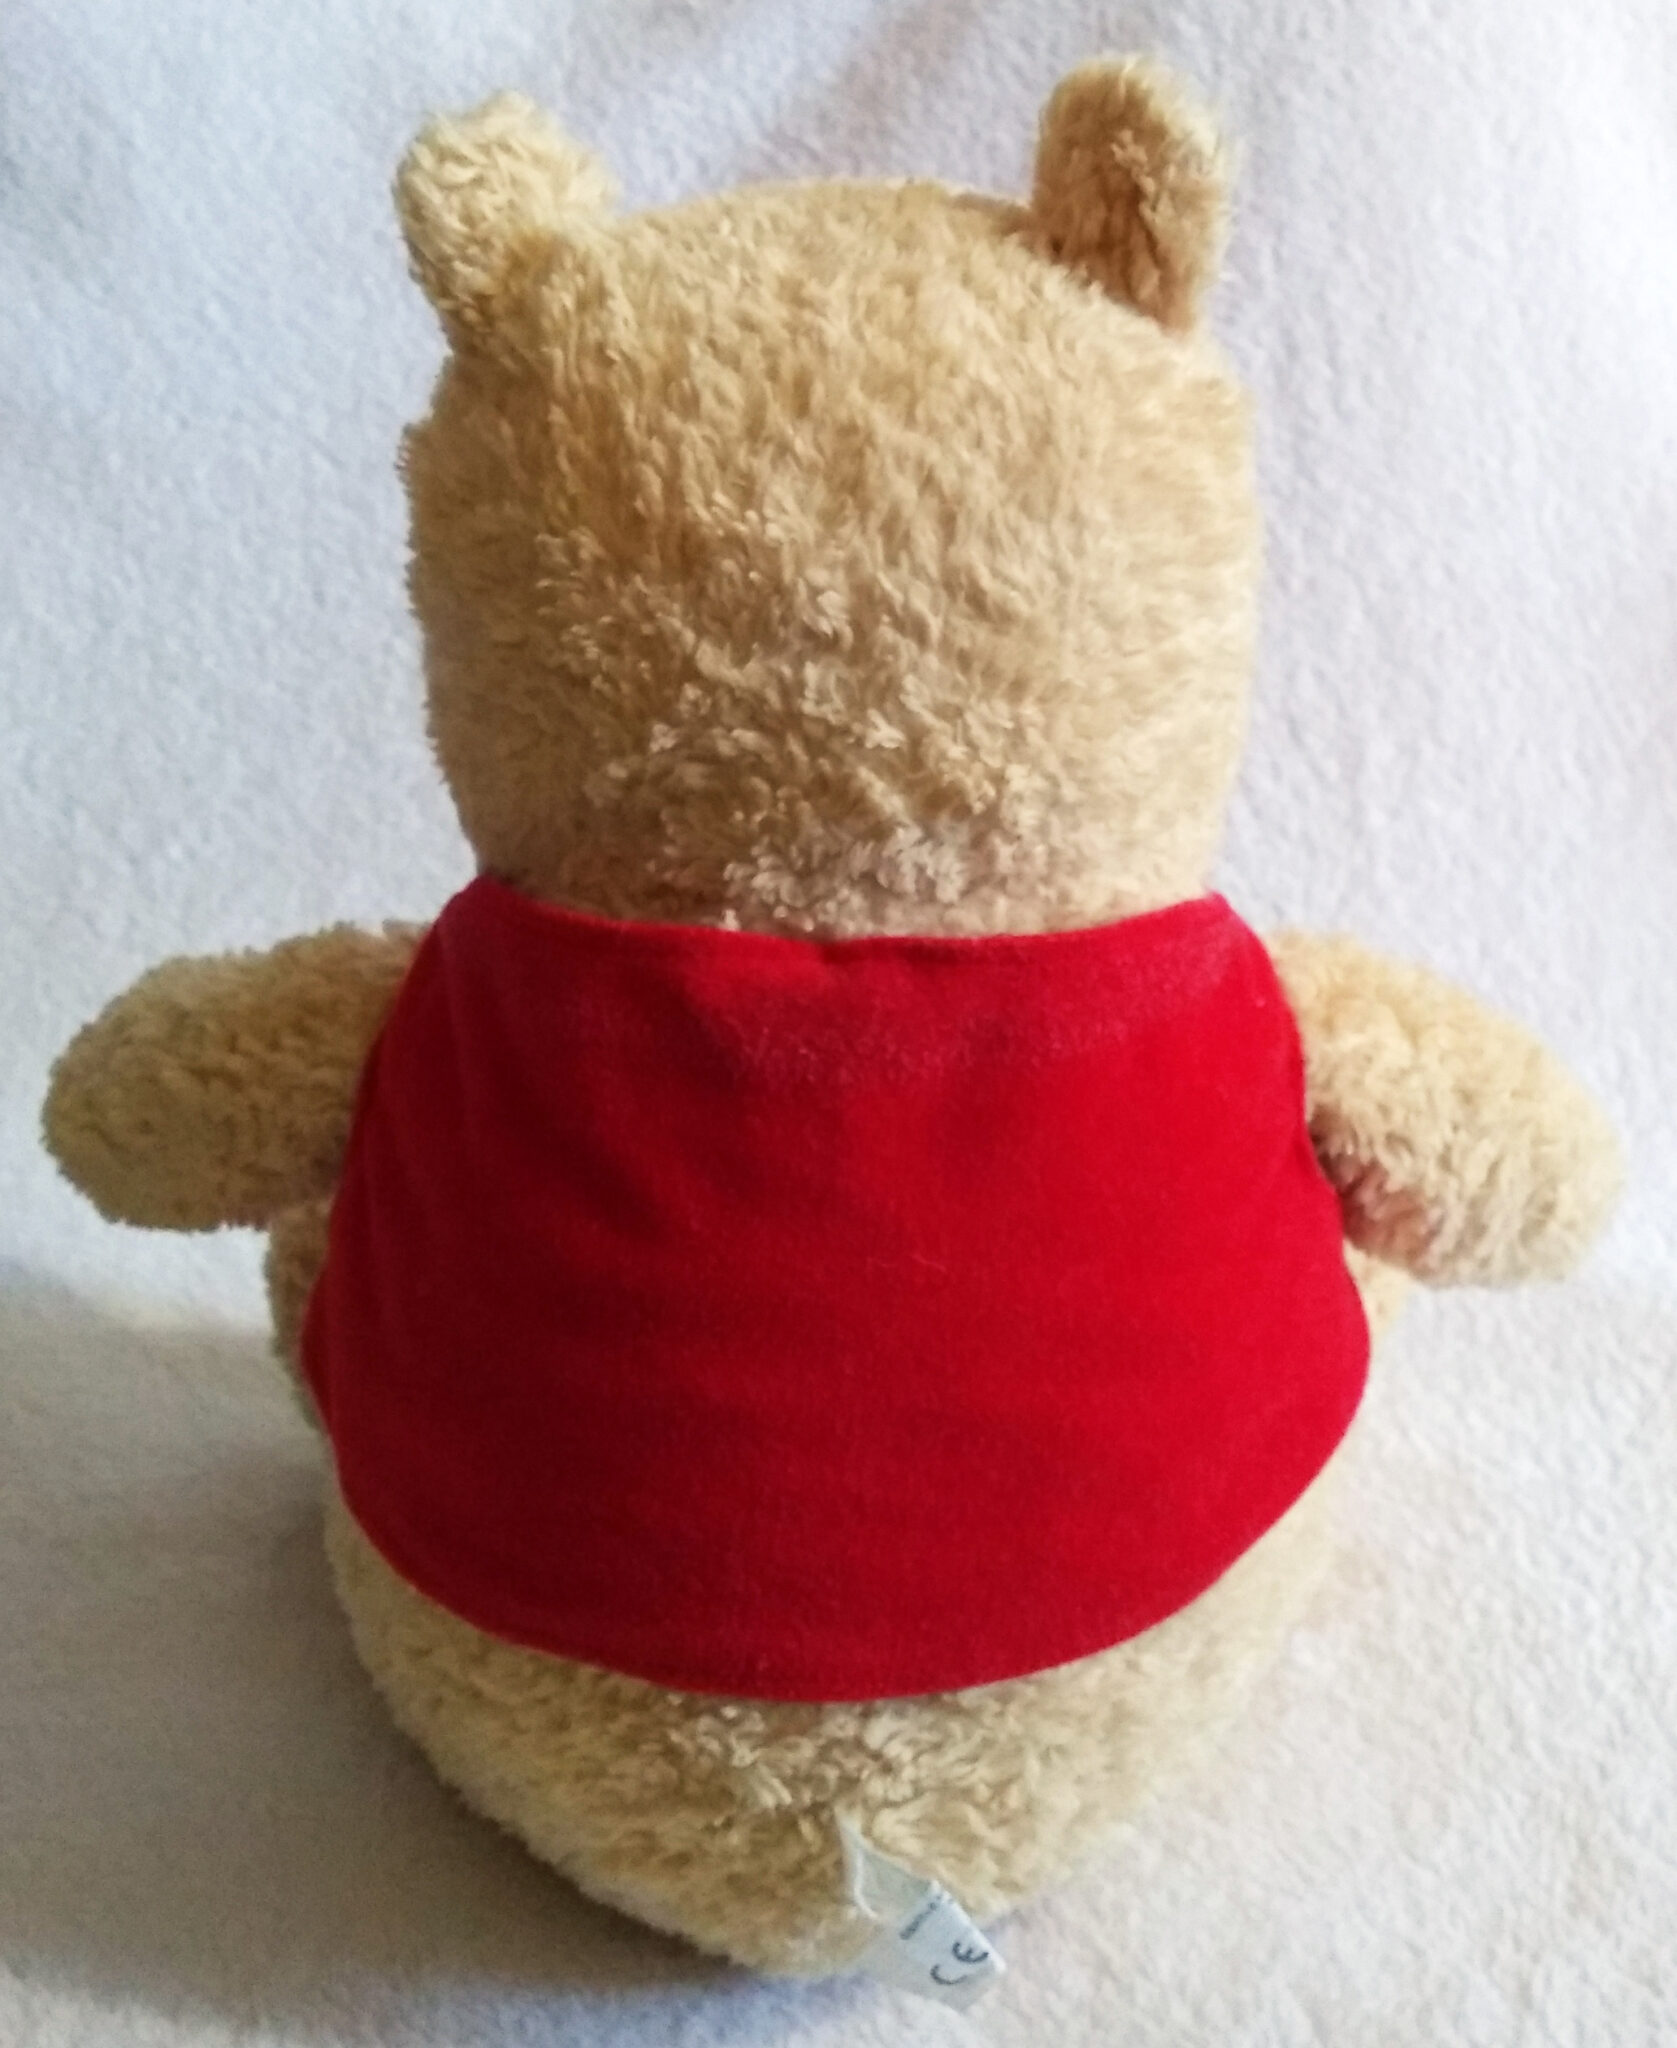 Winnie the Pooh – Classic Pooh plush – Golden Bear – A BIT OF